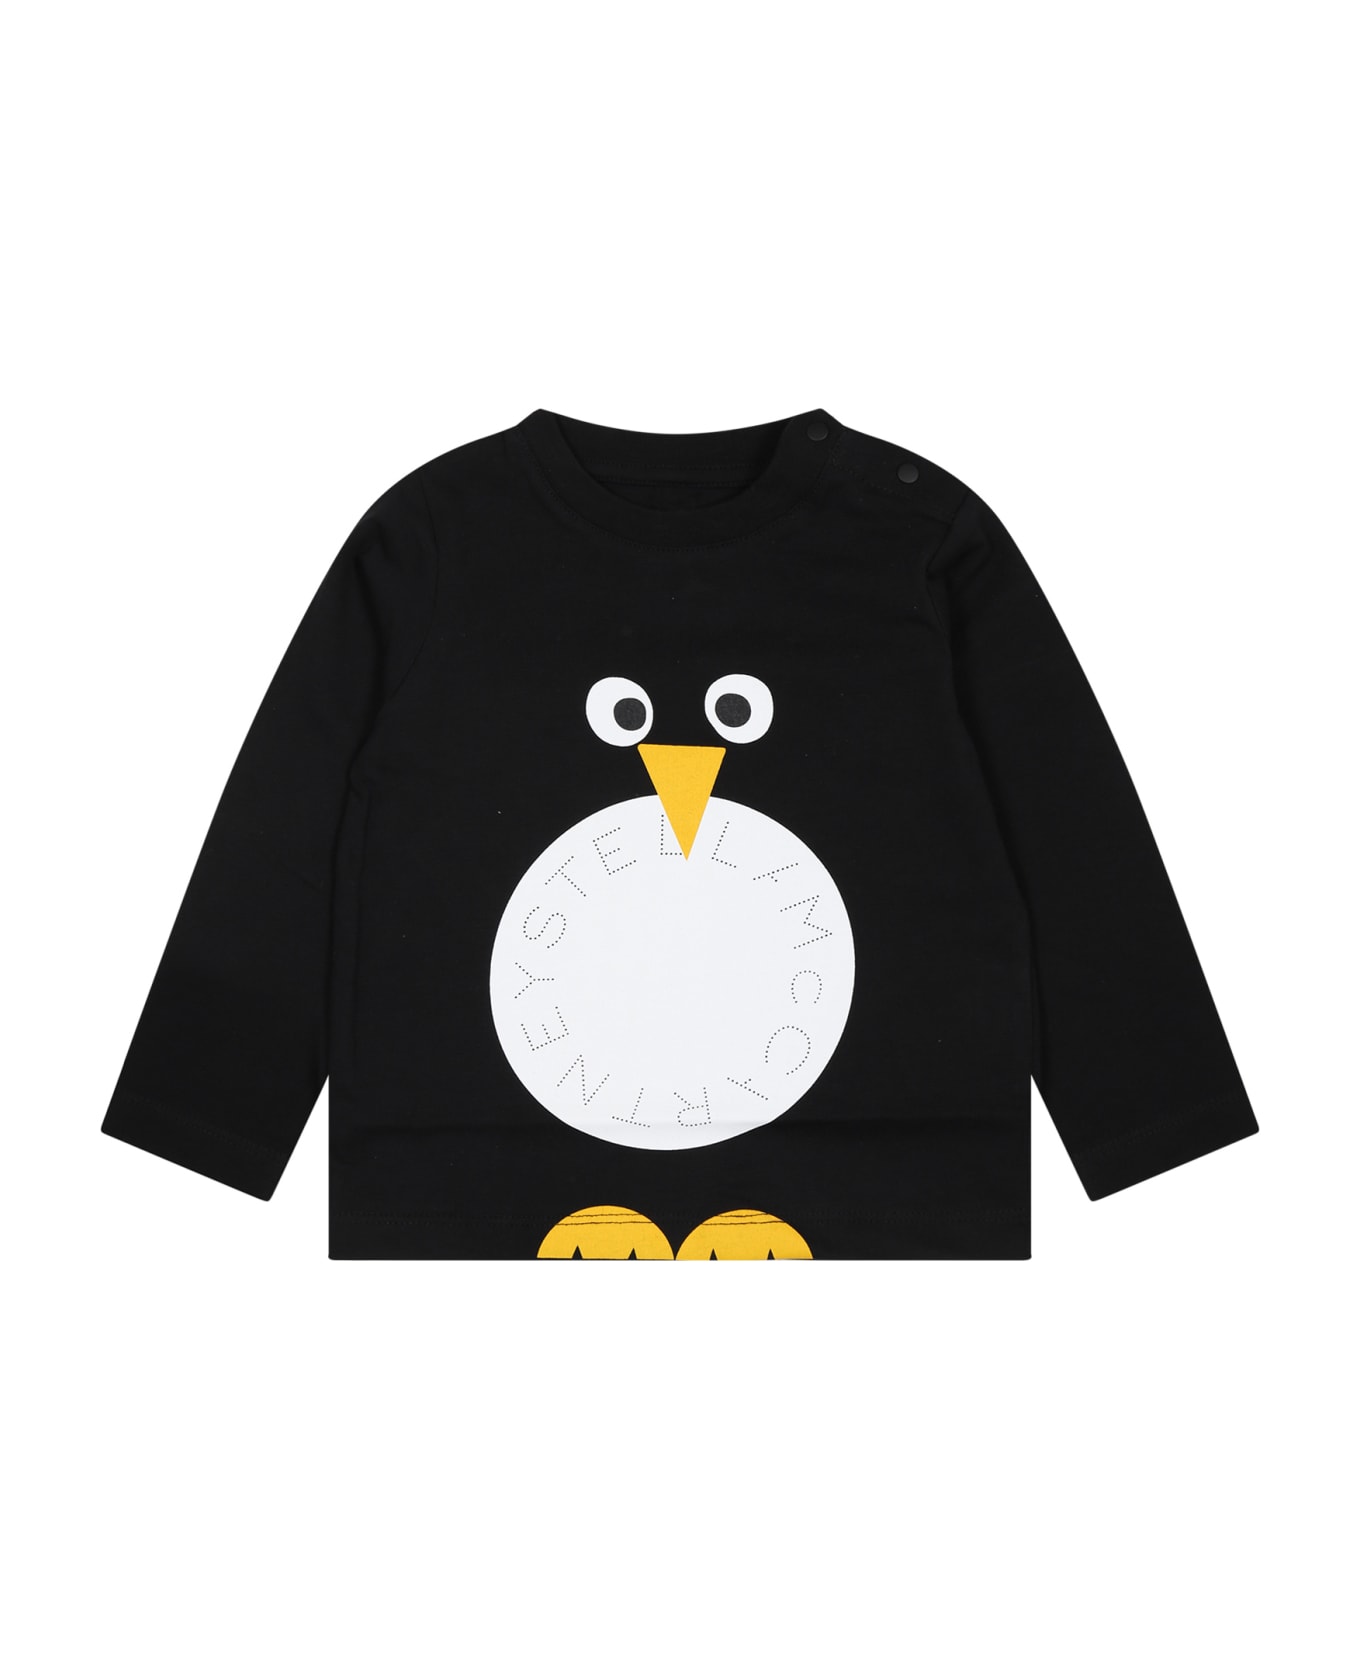 Stella McCartney Kids Black T-shirt For Baby Boy With Logo And Print - Black